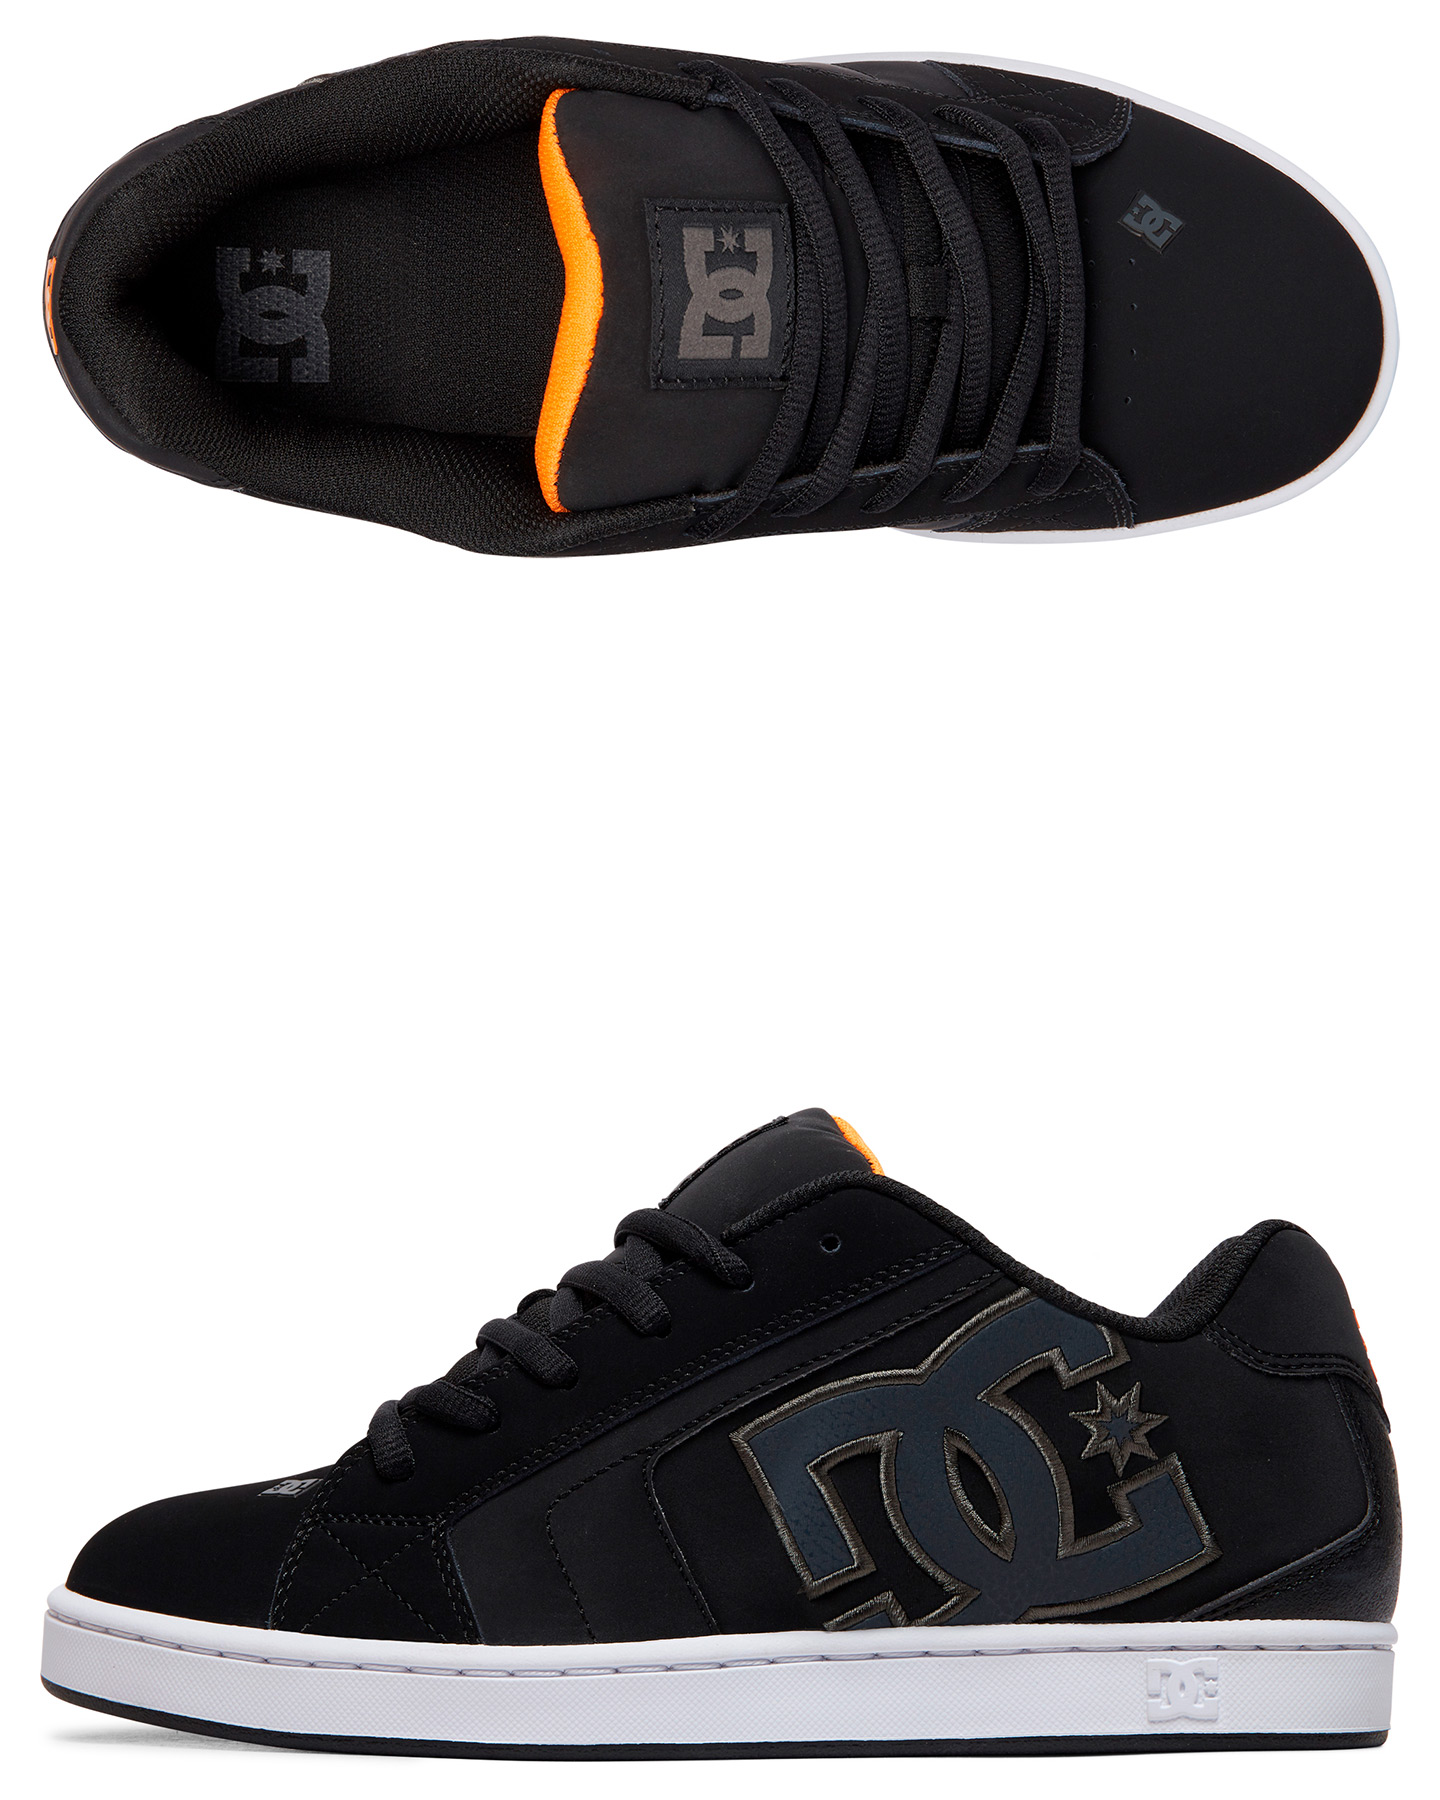 men's black dc skate shoes